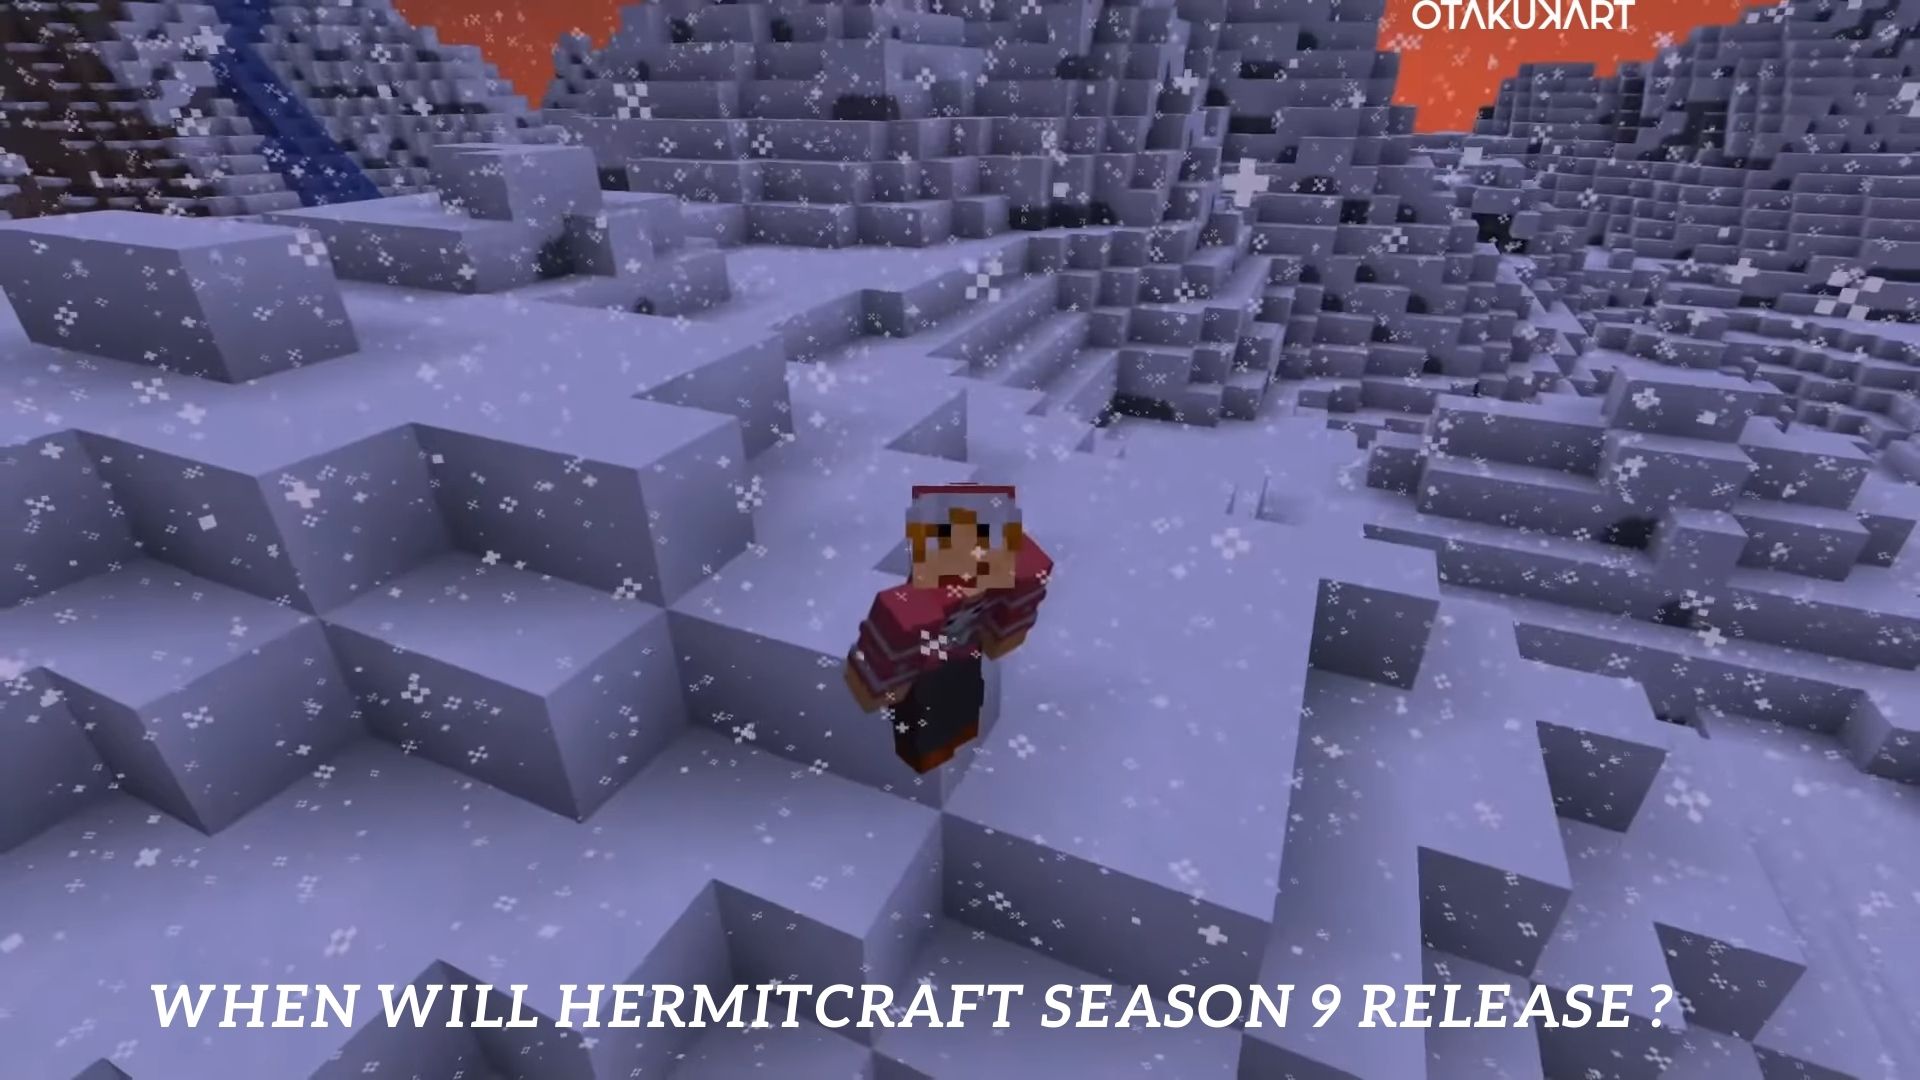 Hermitcraft season 9 Release Date